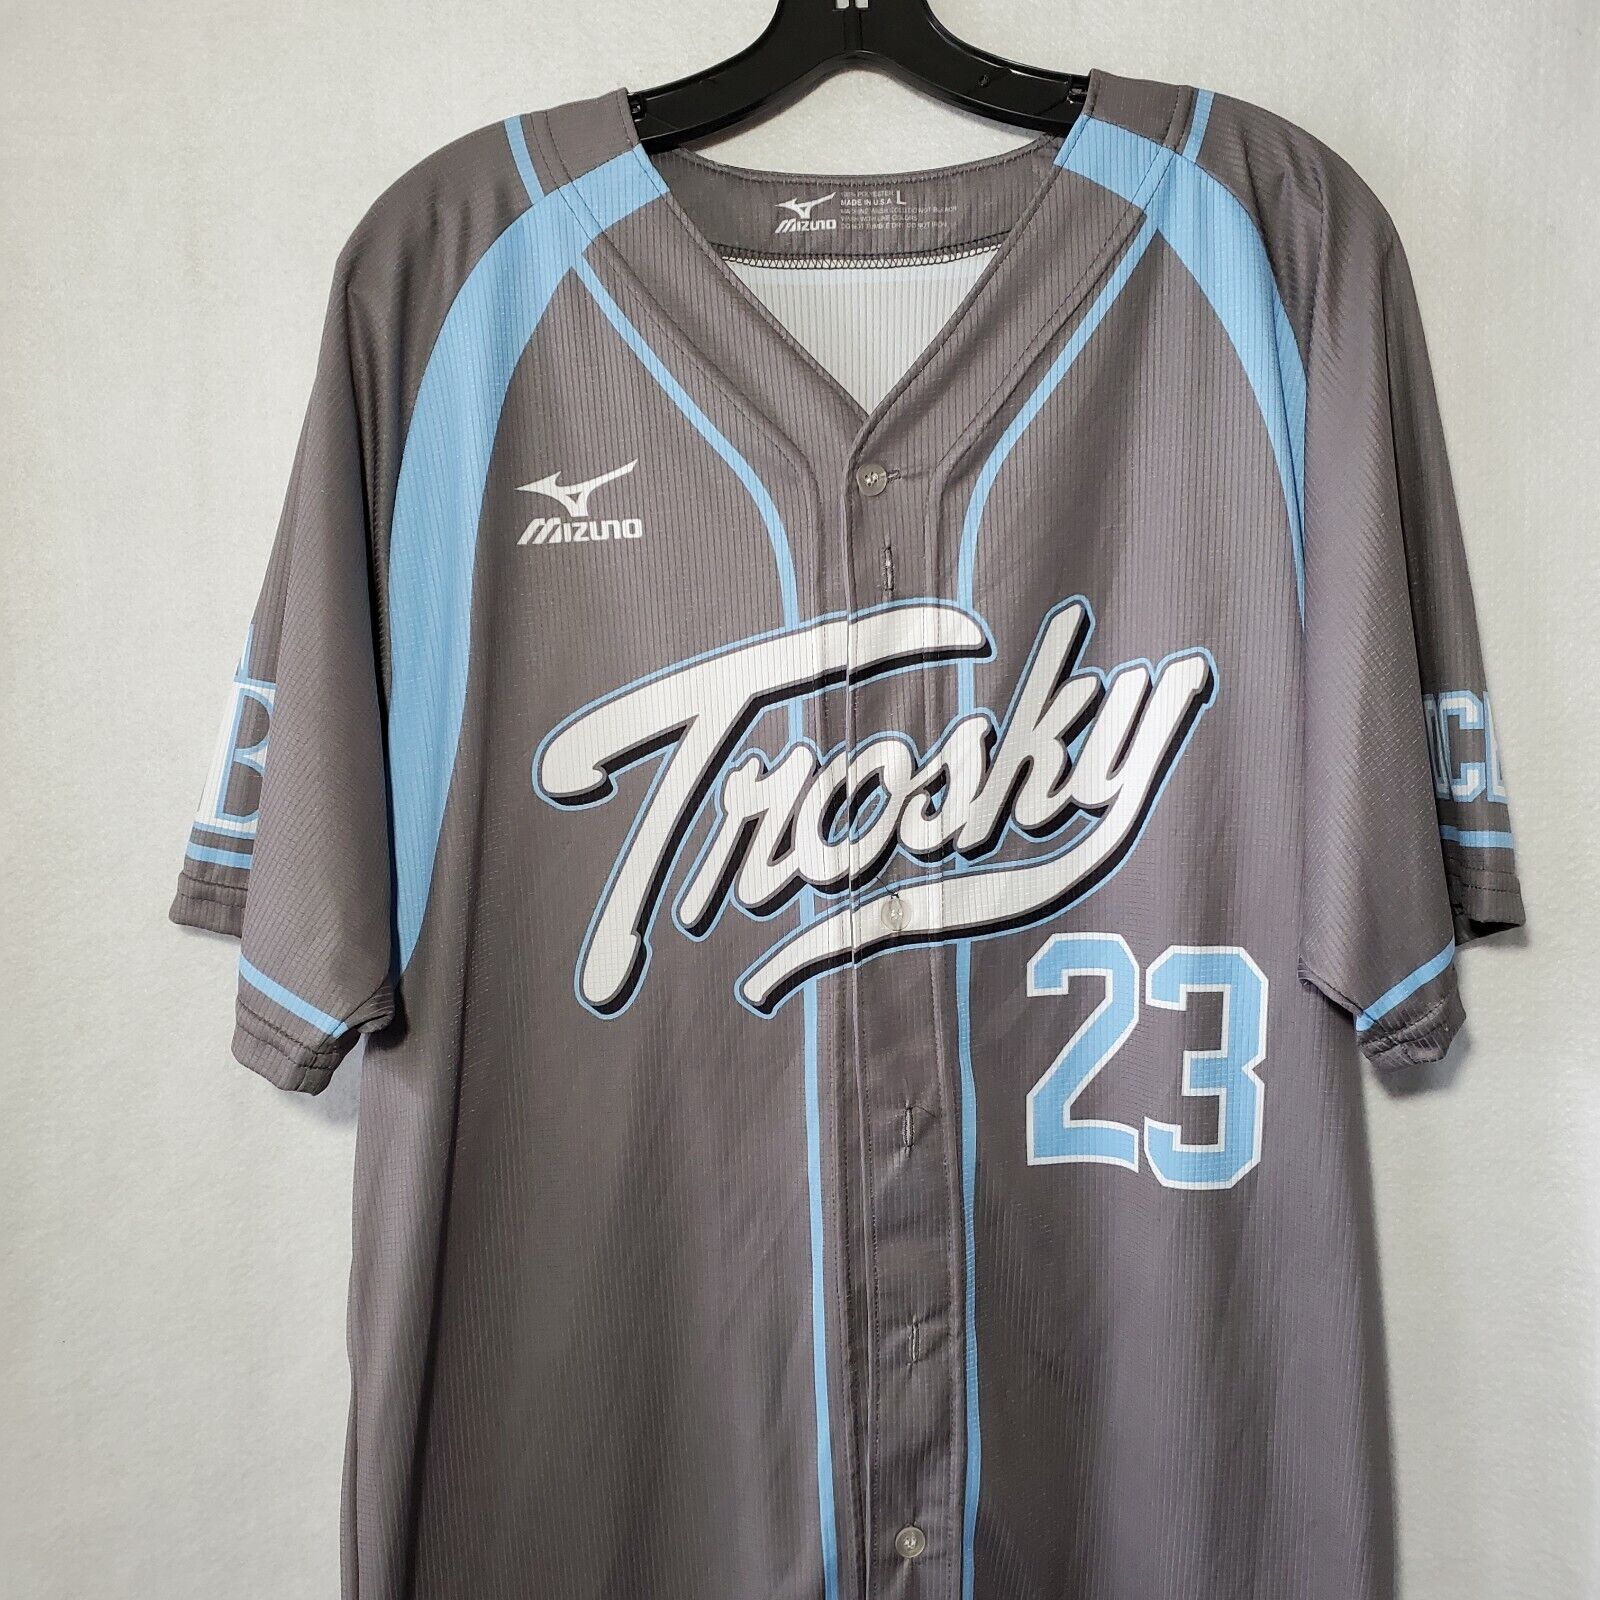 Mizuno Men's Trosky Baseball Jersey Phoenix Mall Grey [Alternative dealer] #23